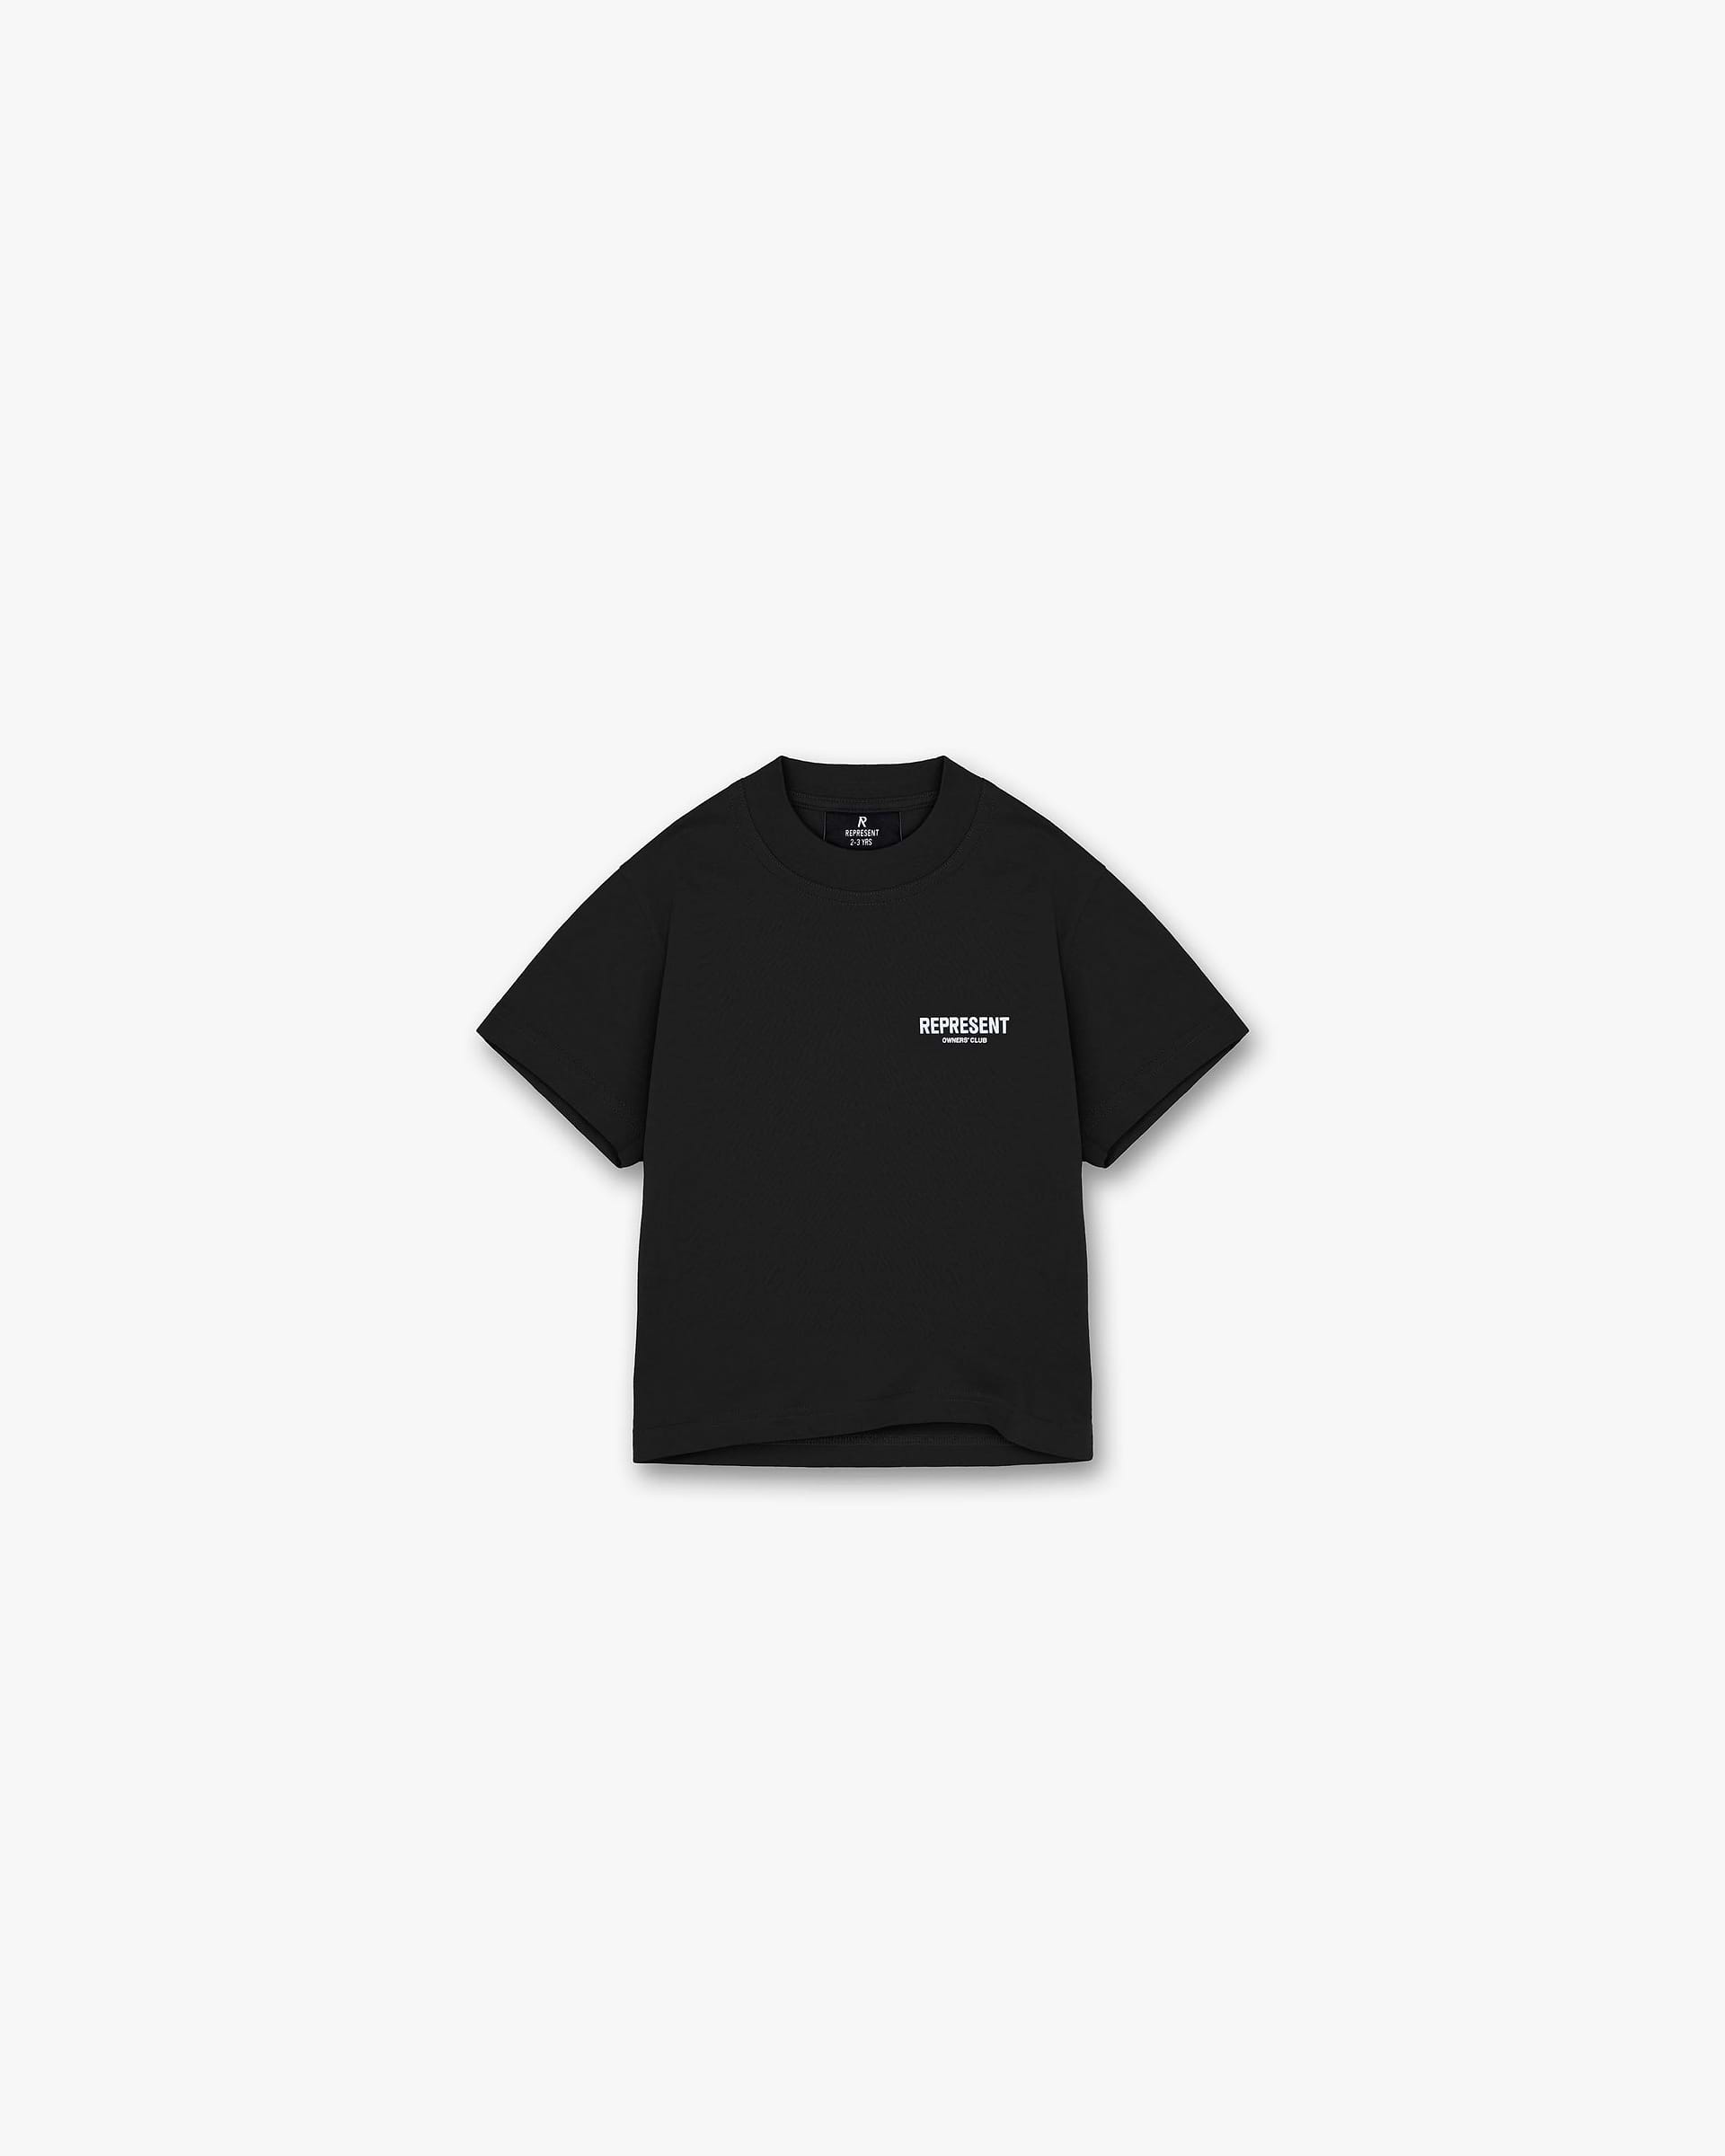 Represent Mini Owners Club T-Shirt | Black T-Shirts Owners Club | Represent Clo